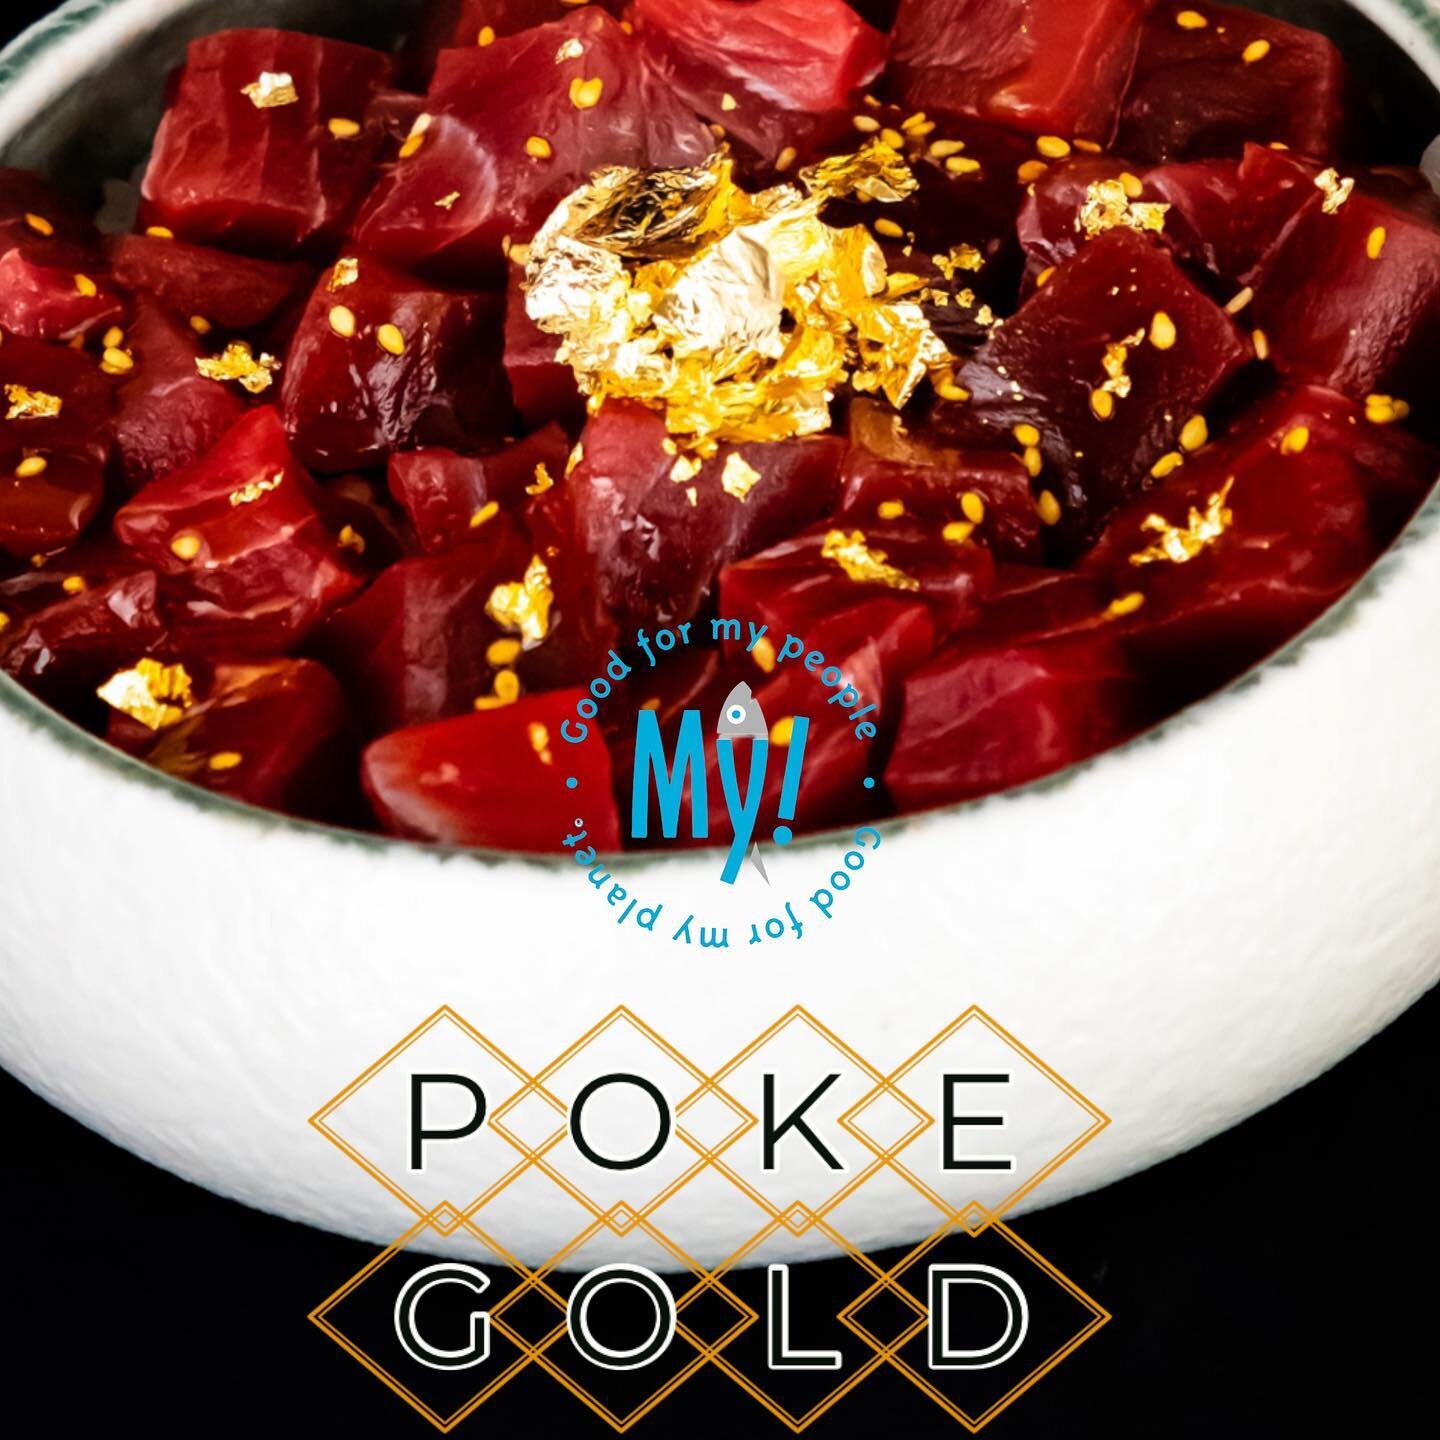 Poke Gold, thon rouge de p&ecirc;che durable. Red Tuna
&bull;
&bull;
&bull;
&bull;
&bull;
#riviera #monaco #sushi #luxurylife #buick #montecarlo #sushitime #sashimi #frenchrivieraconnect #luxurylifestyle #sushilovers #millionaire #japanesefood #money